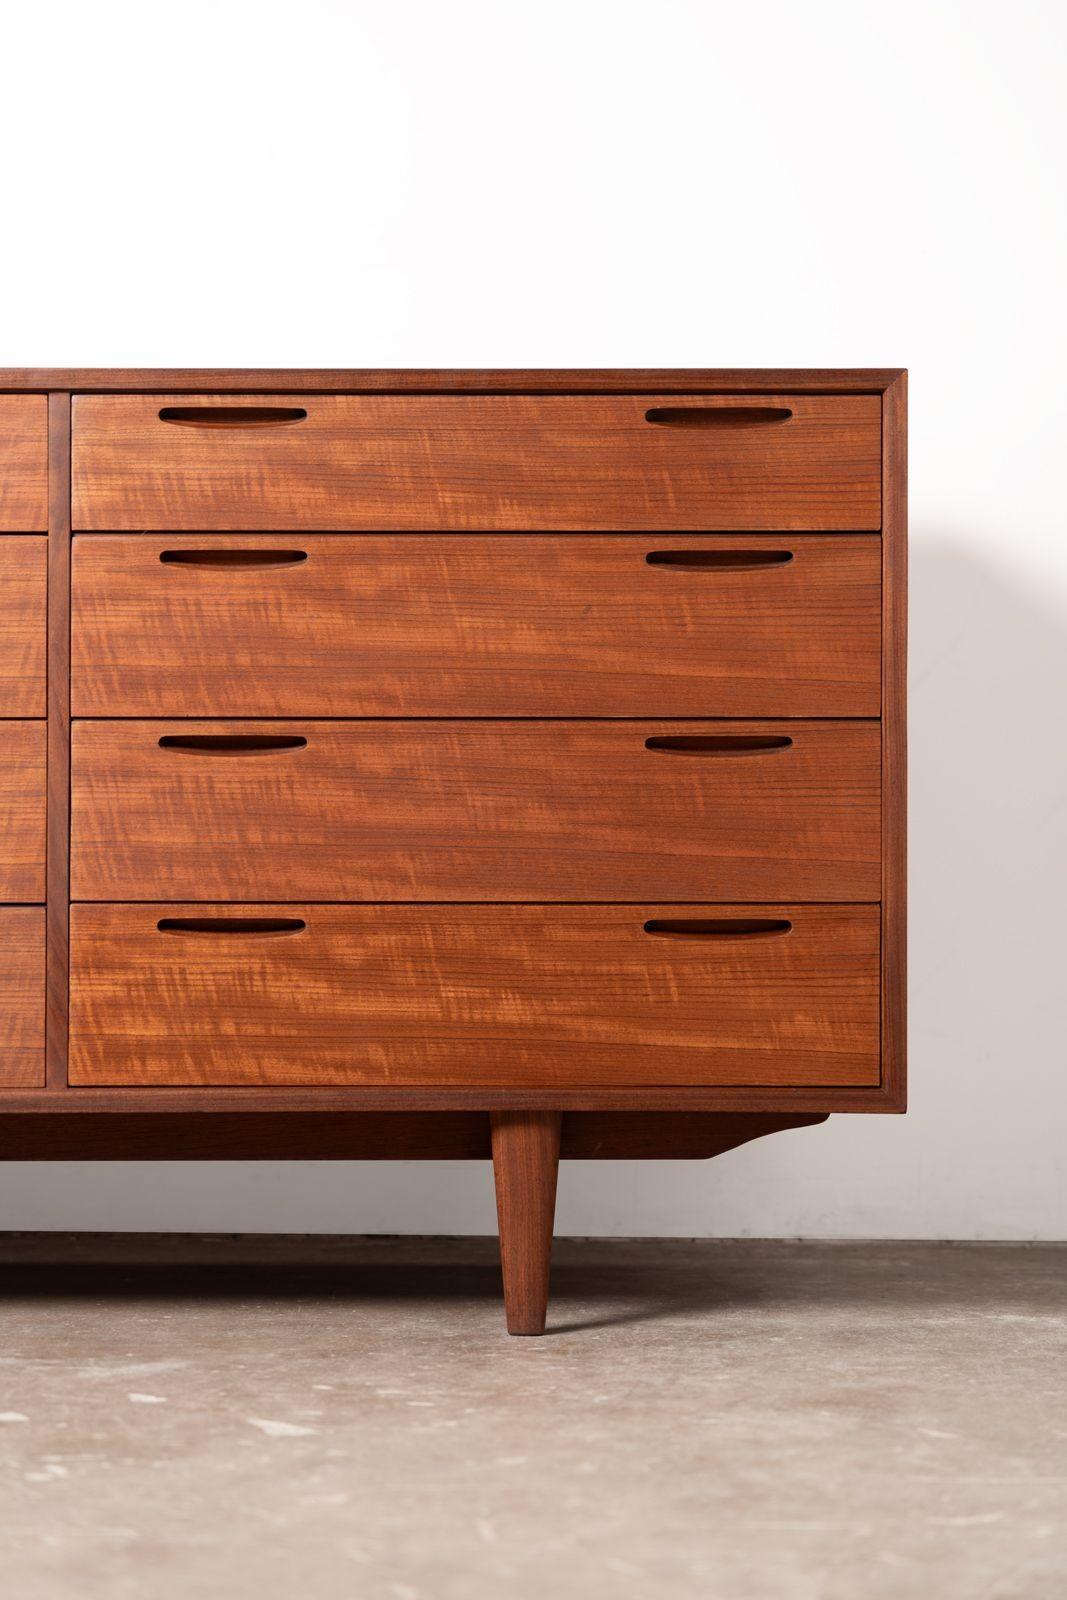 Ib Kofod Larsen Danish Modern Twelve Drawer Dresser in Teak 1960s In Good Condition For Sale In Dallas, TX